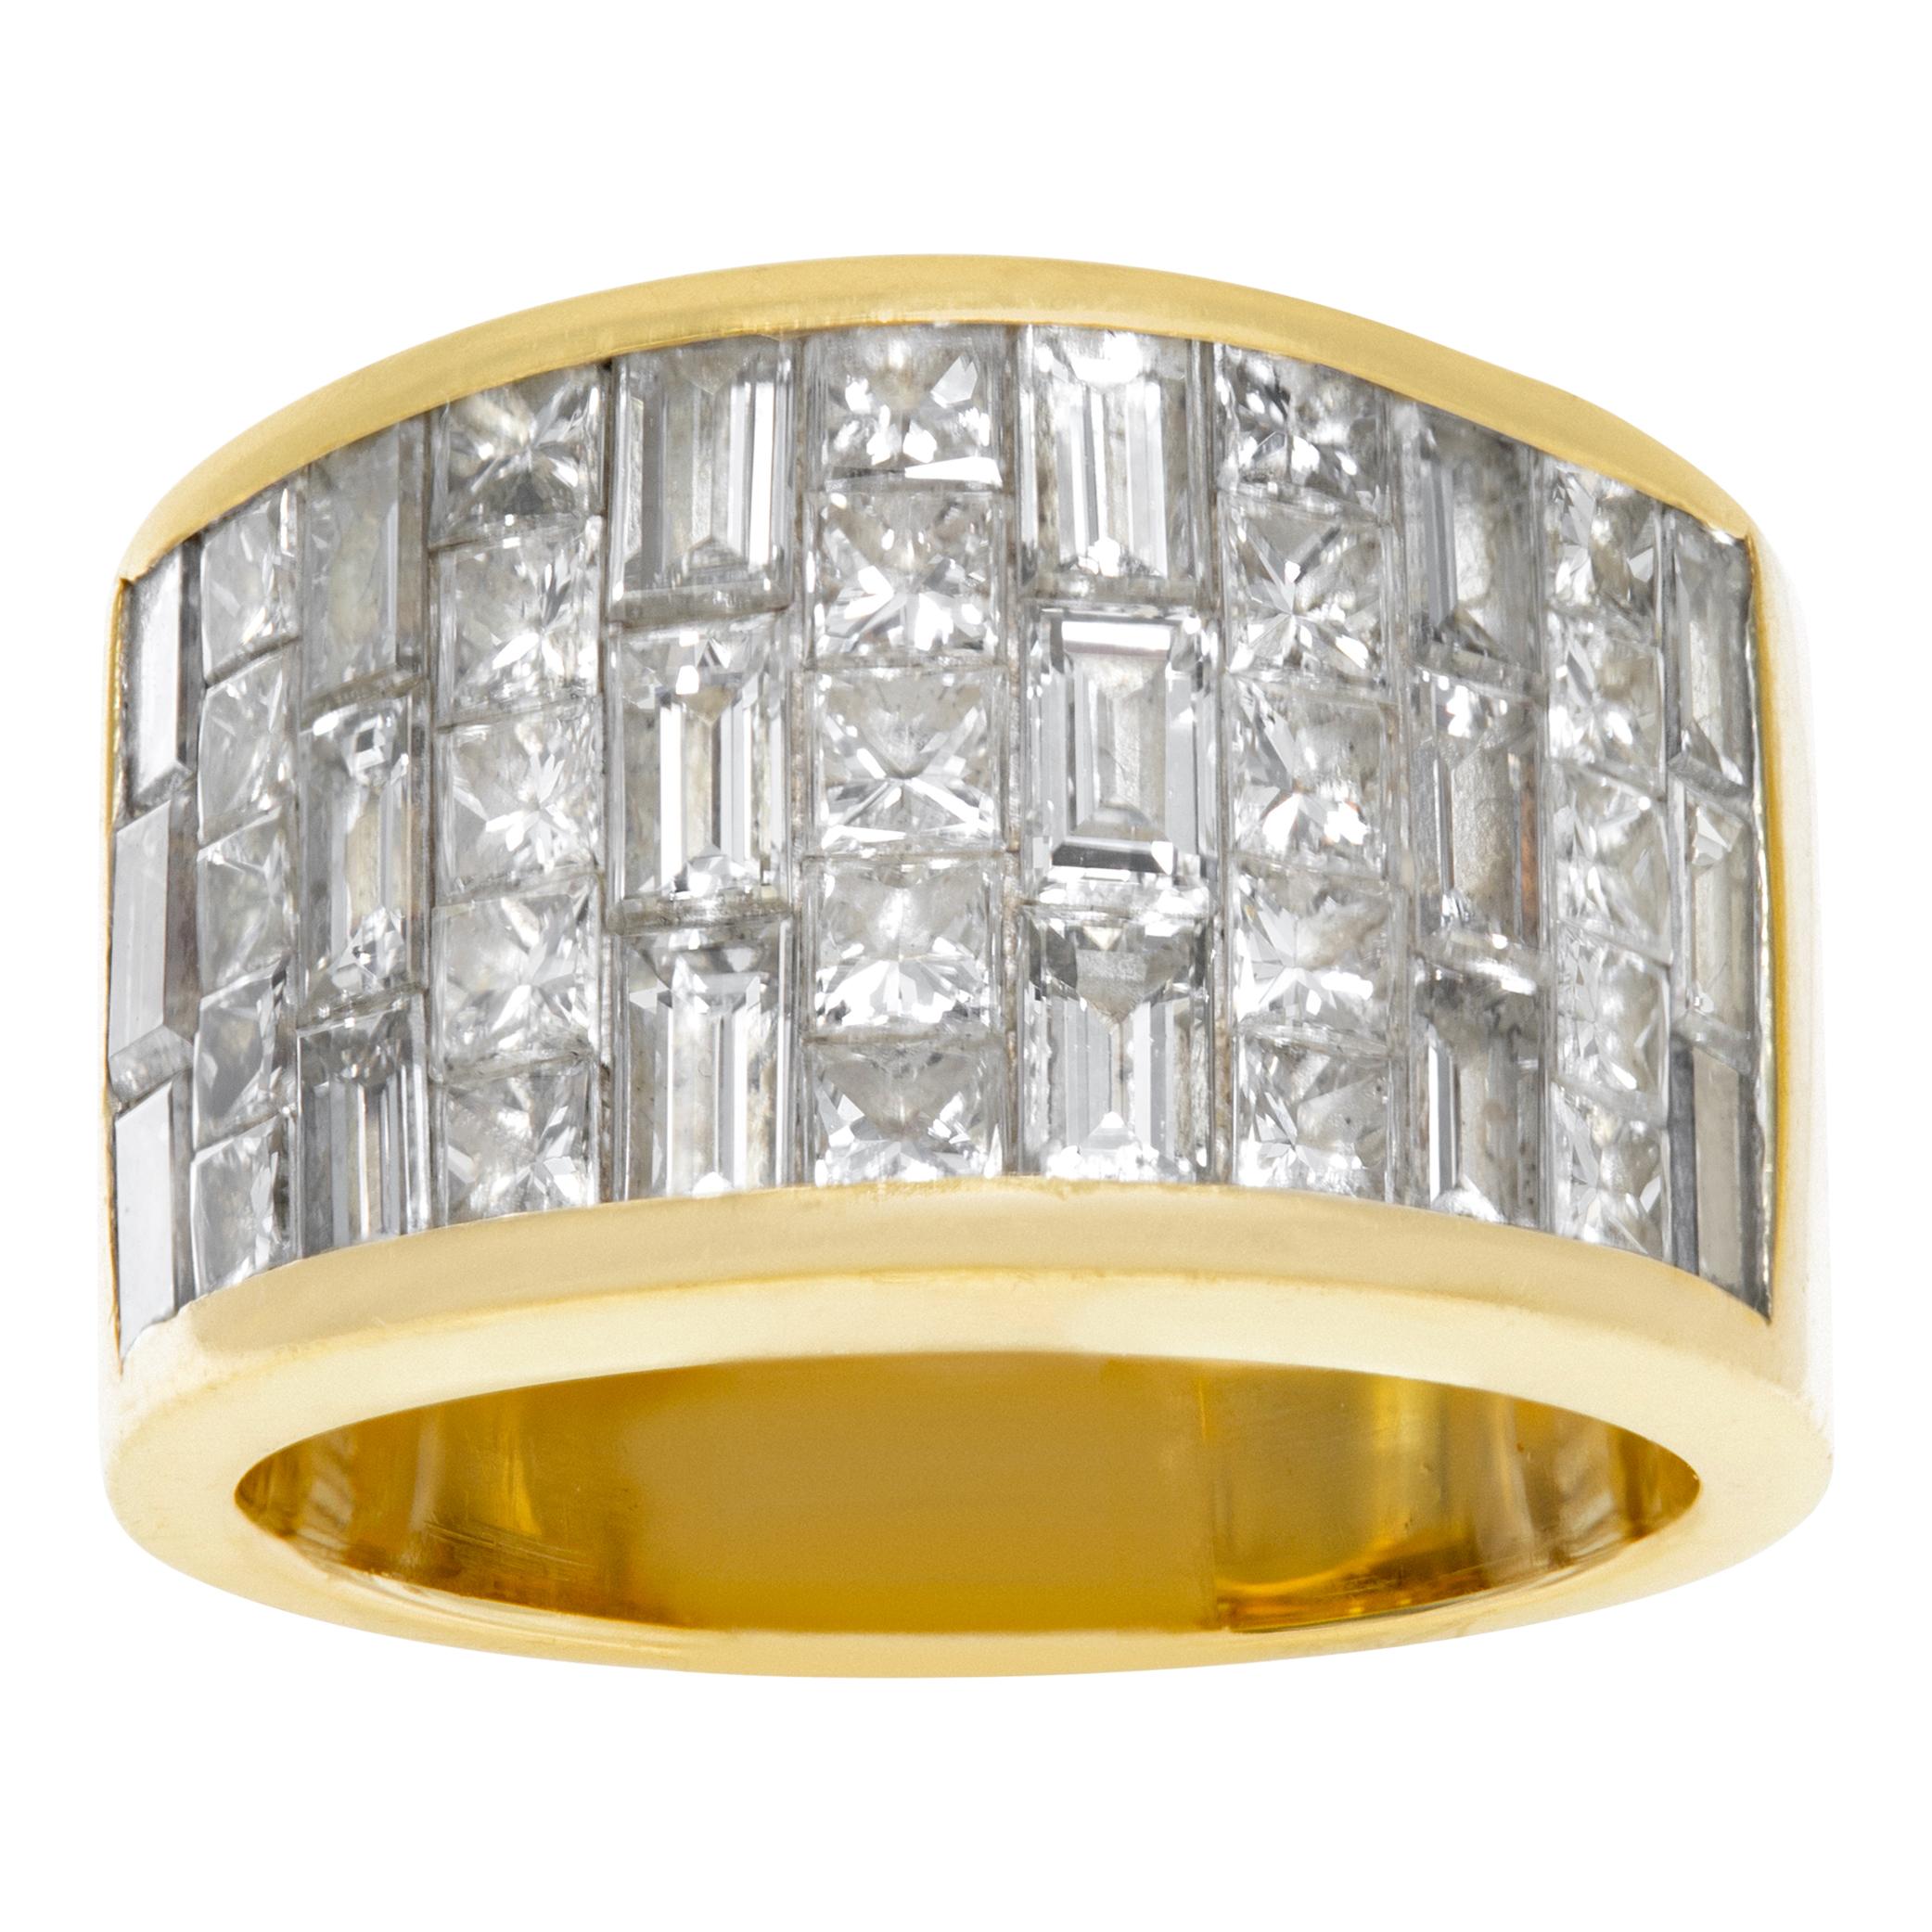 Baguette & pincess cut diamonds ring in yellow gold